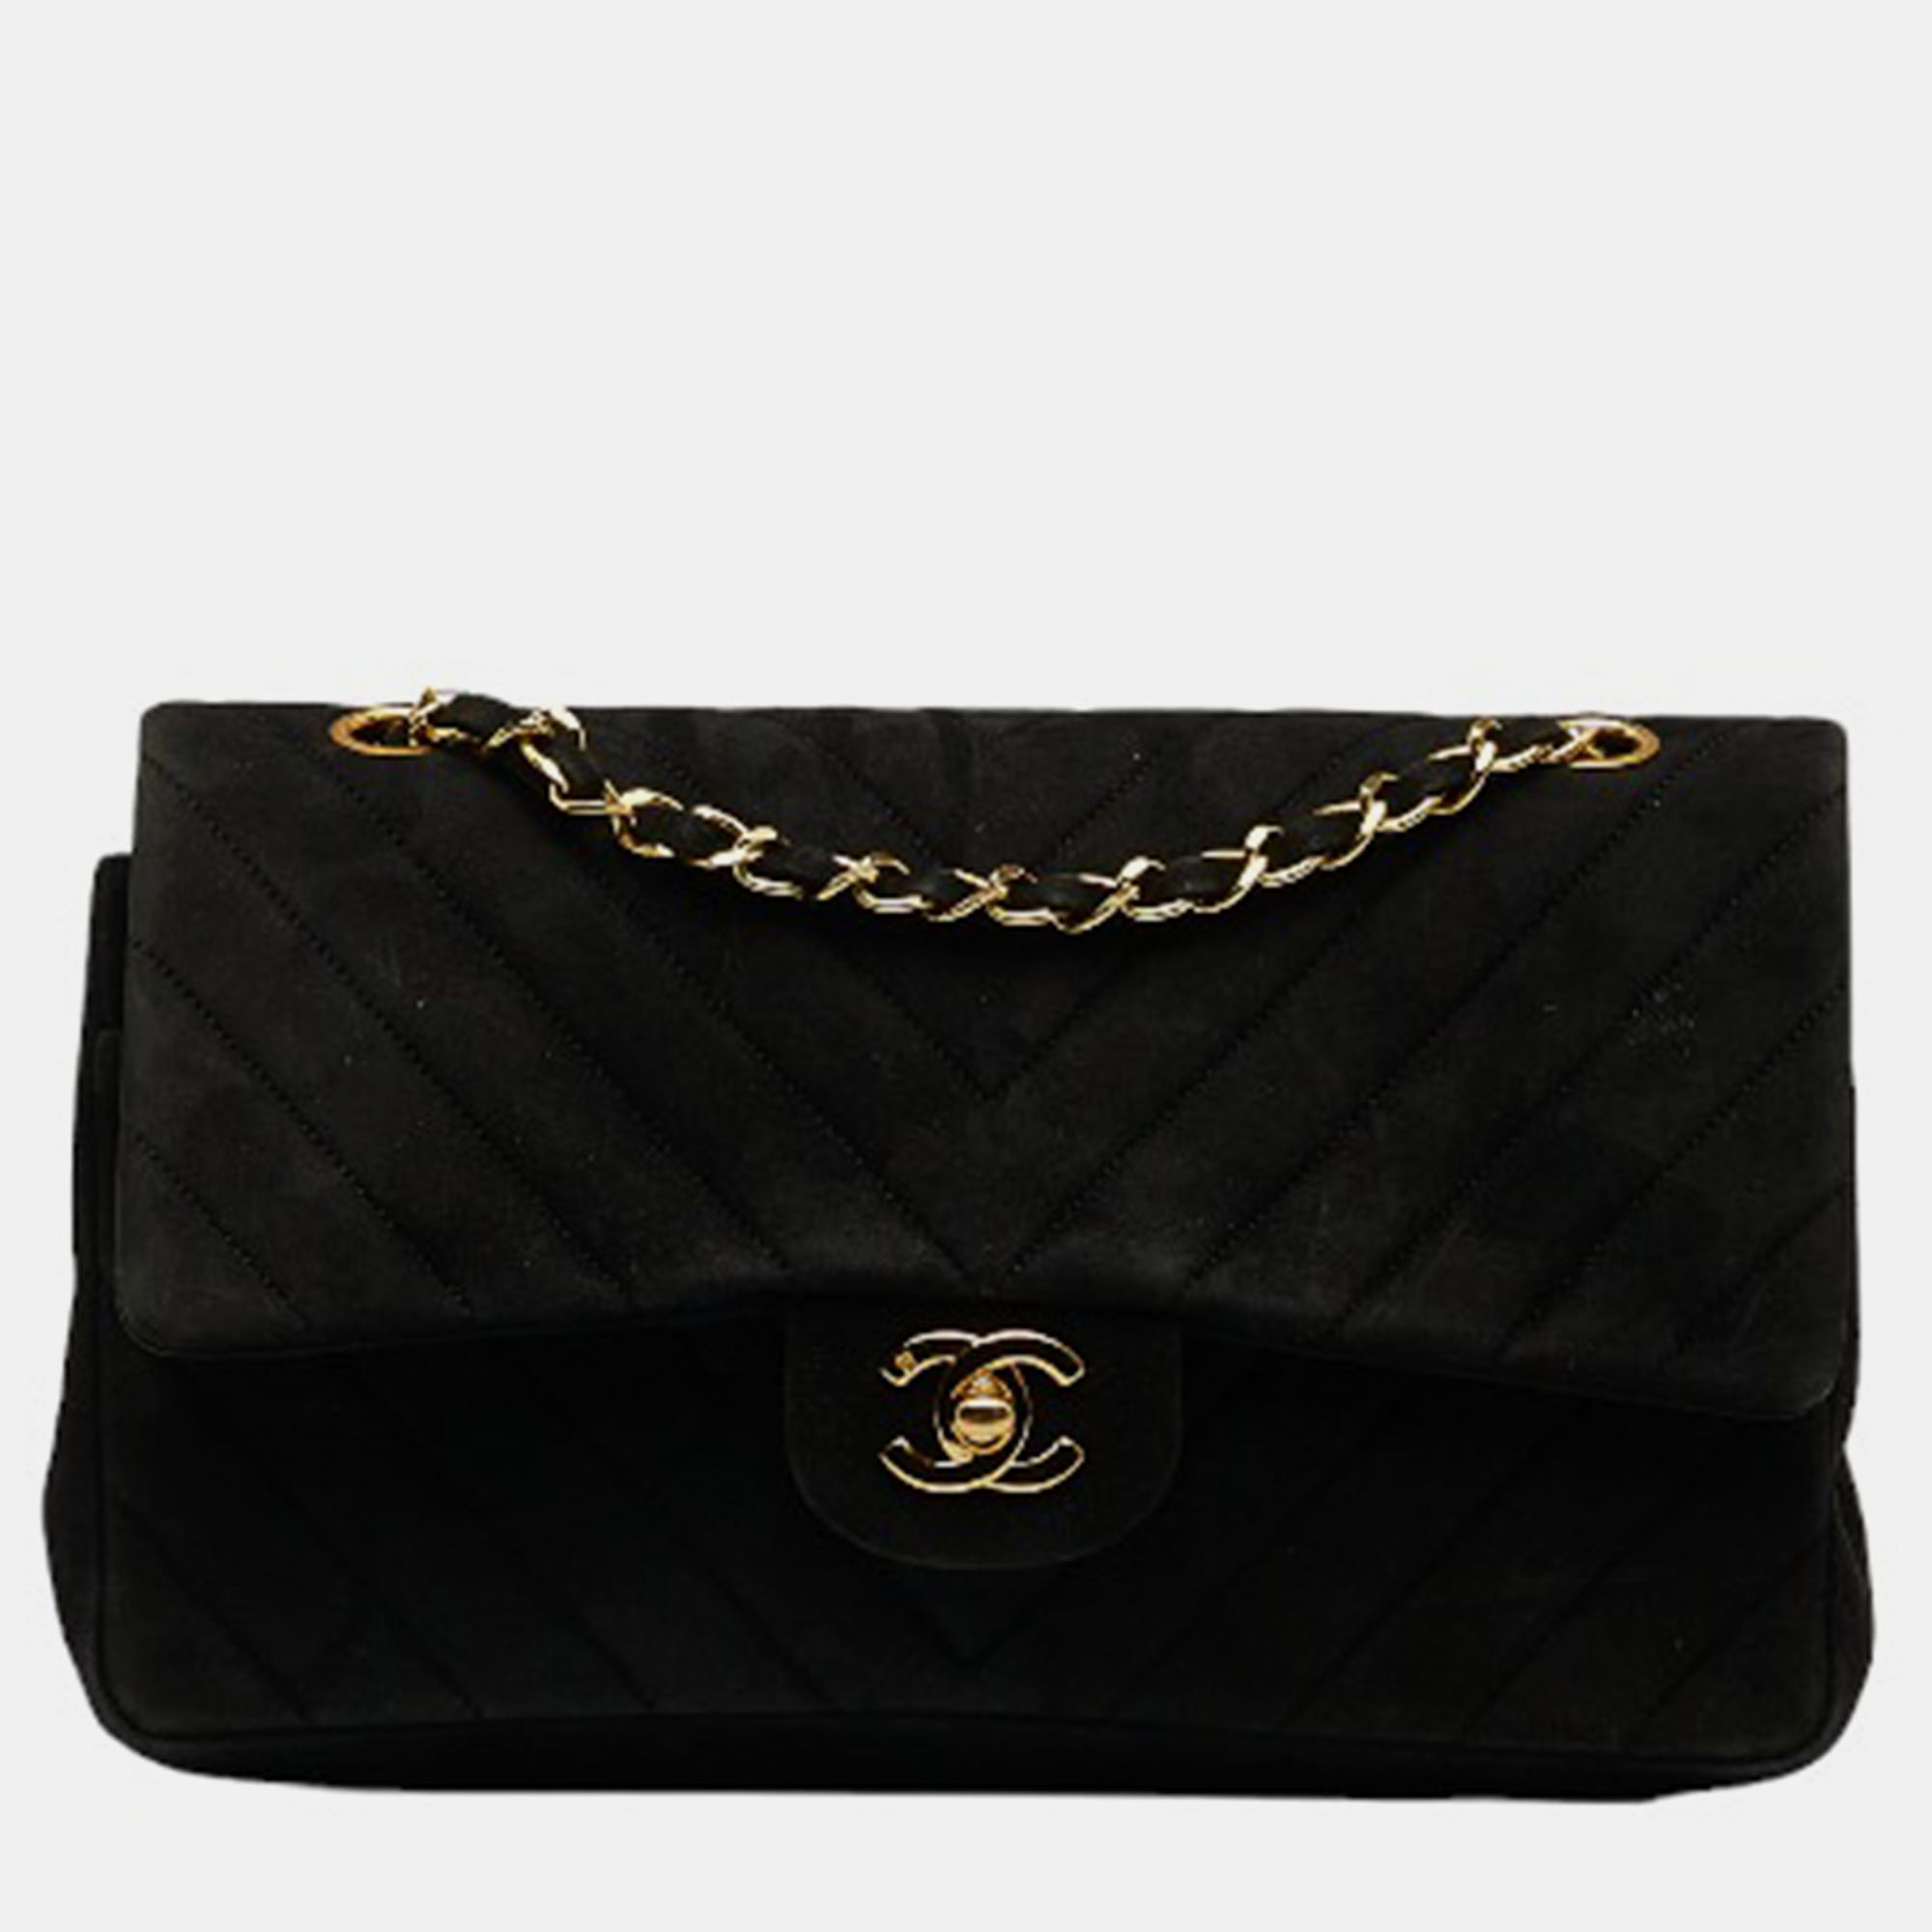 Chanel black suede cc chevron suede medium double flap bag